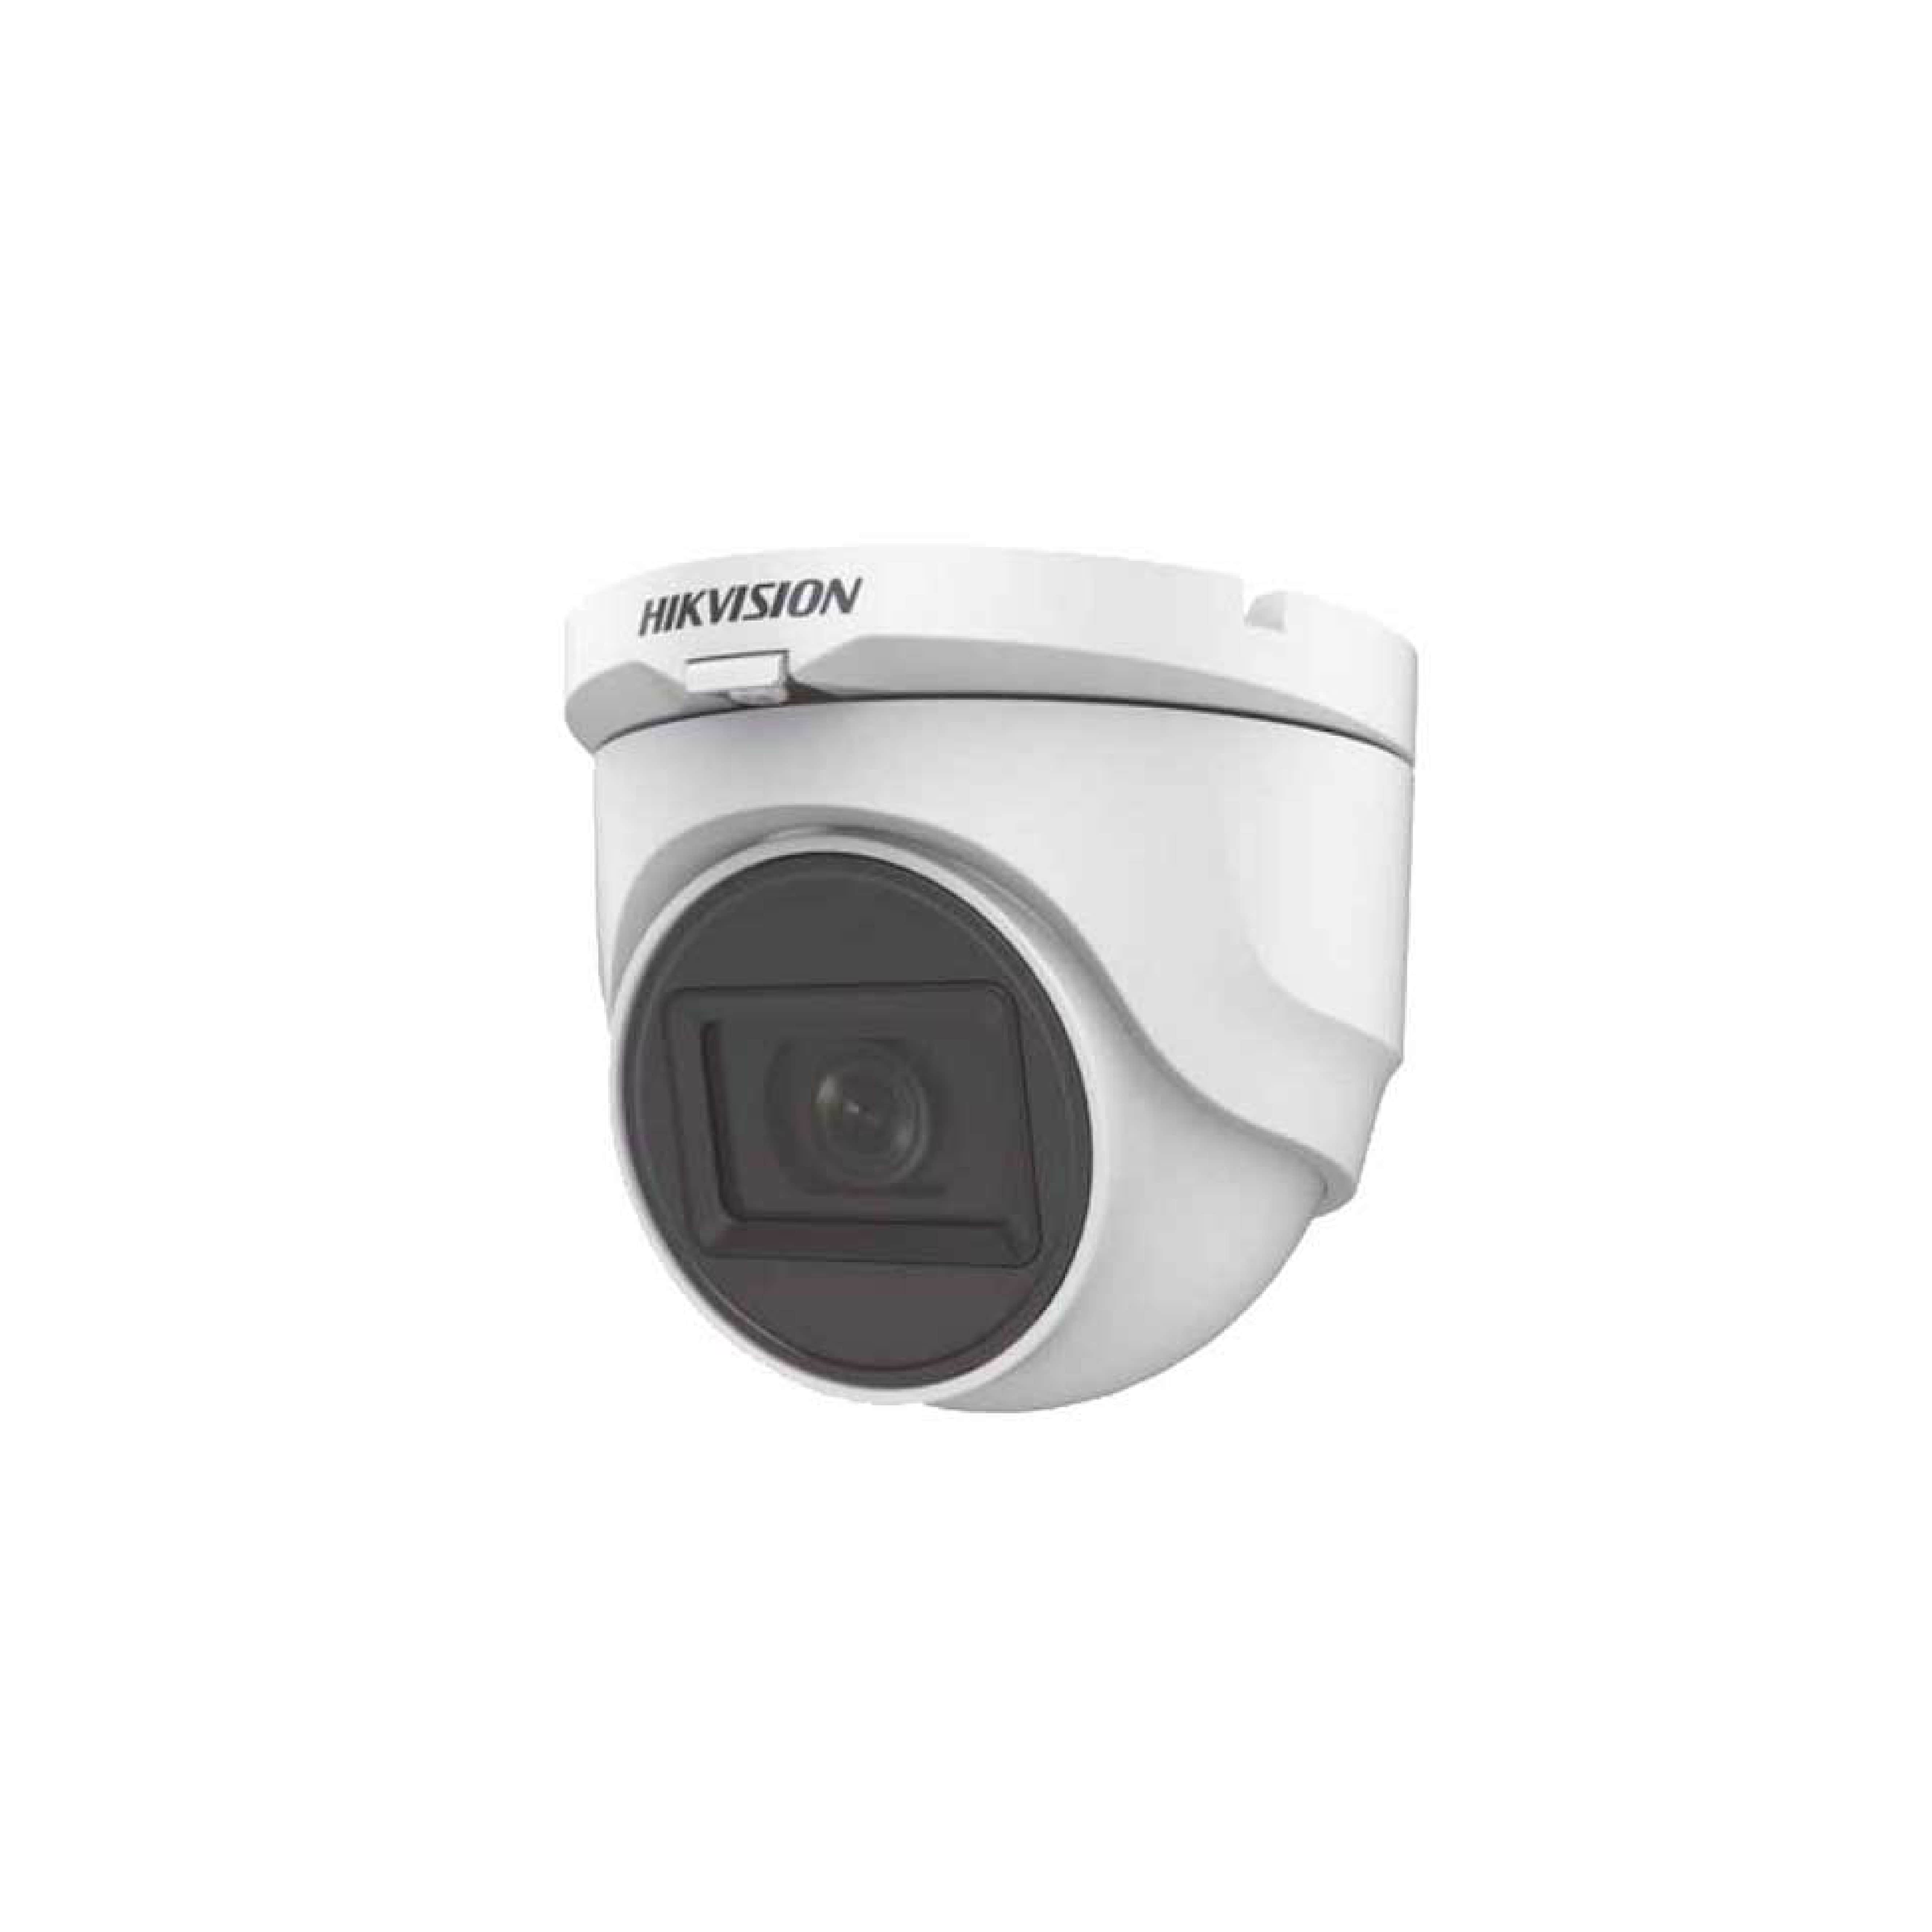 Mắt Camera đồng trục Hikvision DS-2CE76D0T-ITPFS 2.0 Mpx lắp trong nhà